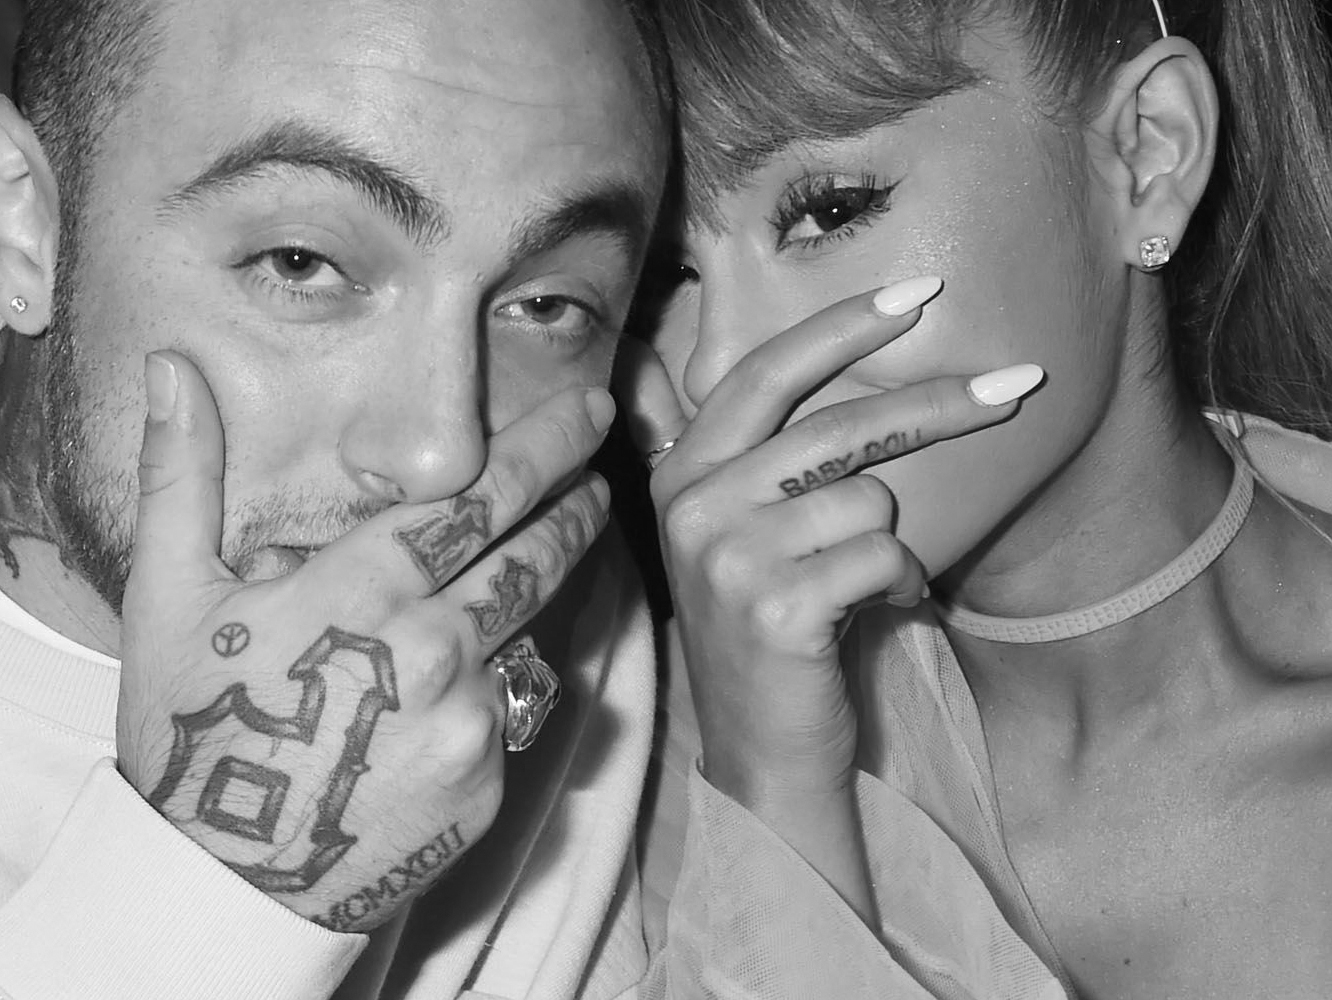  Ariana Grande se pronuncia finalmente acerca de la muerte de Mac Miller